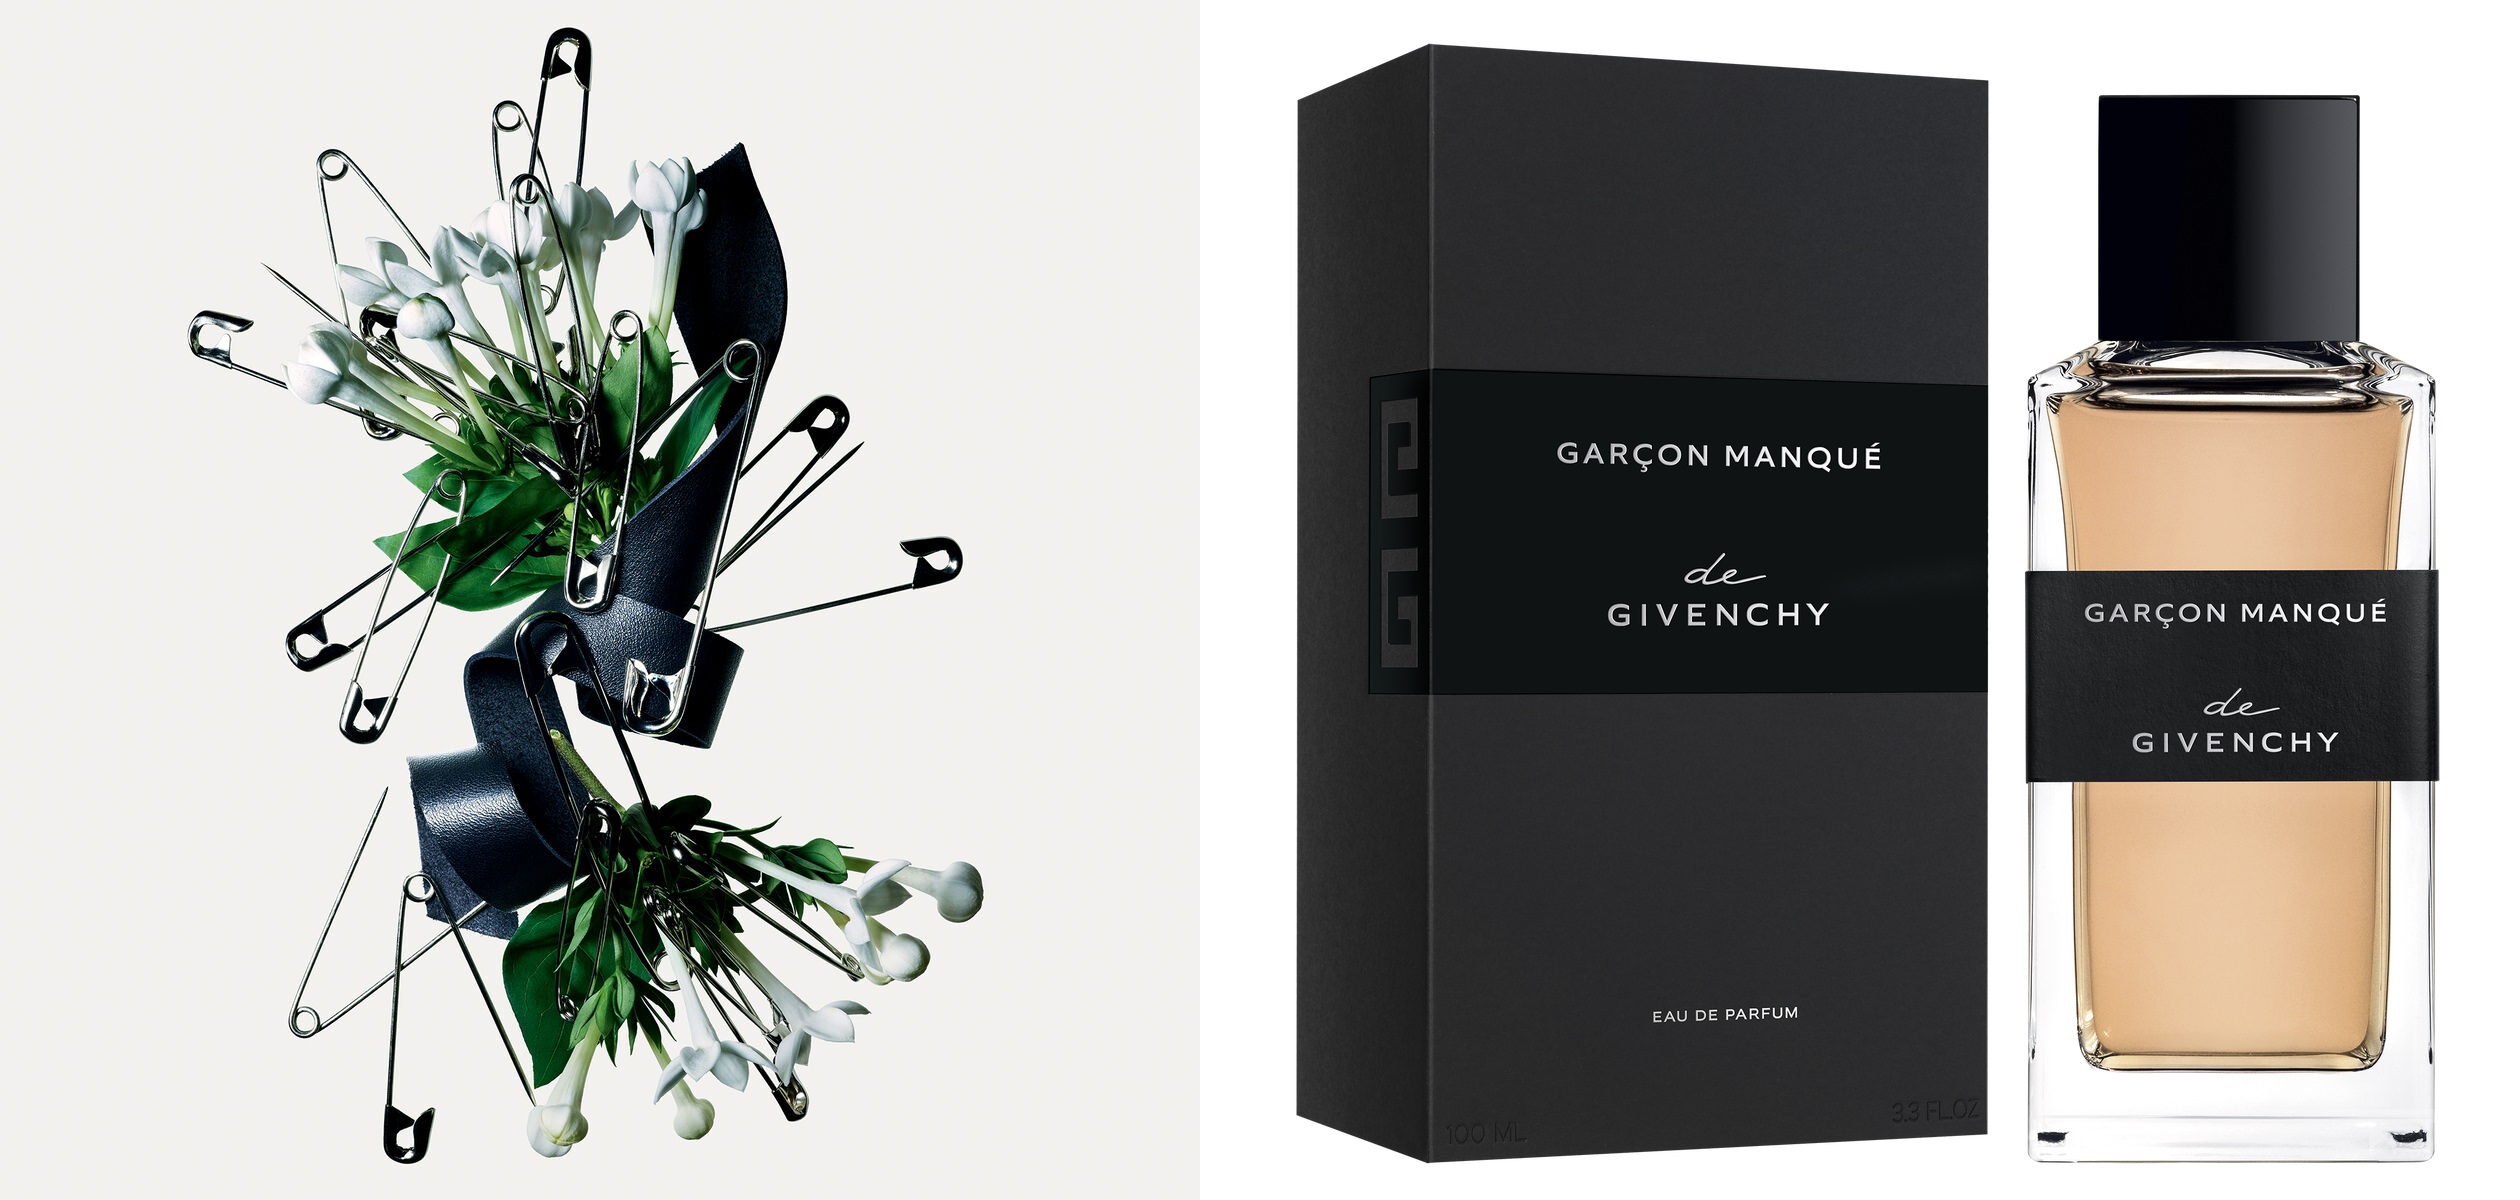 Manque Givenchy